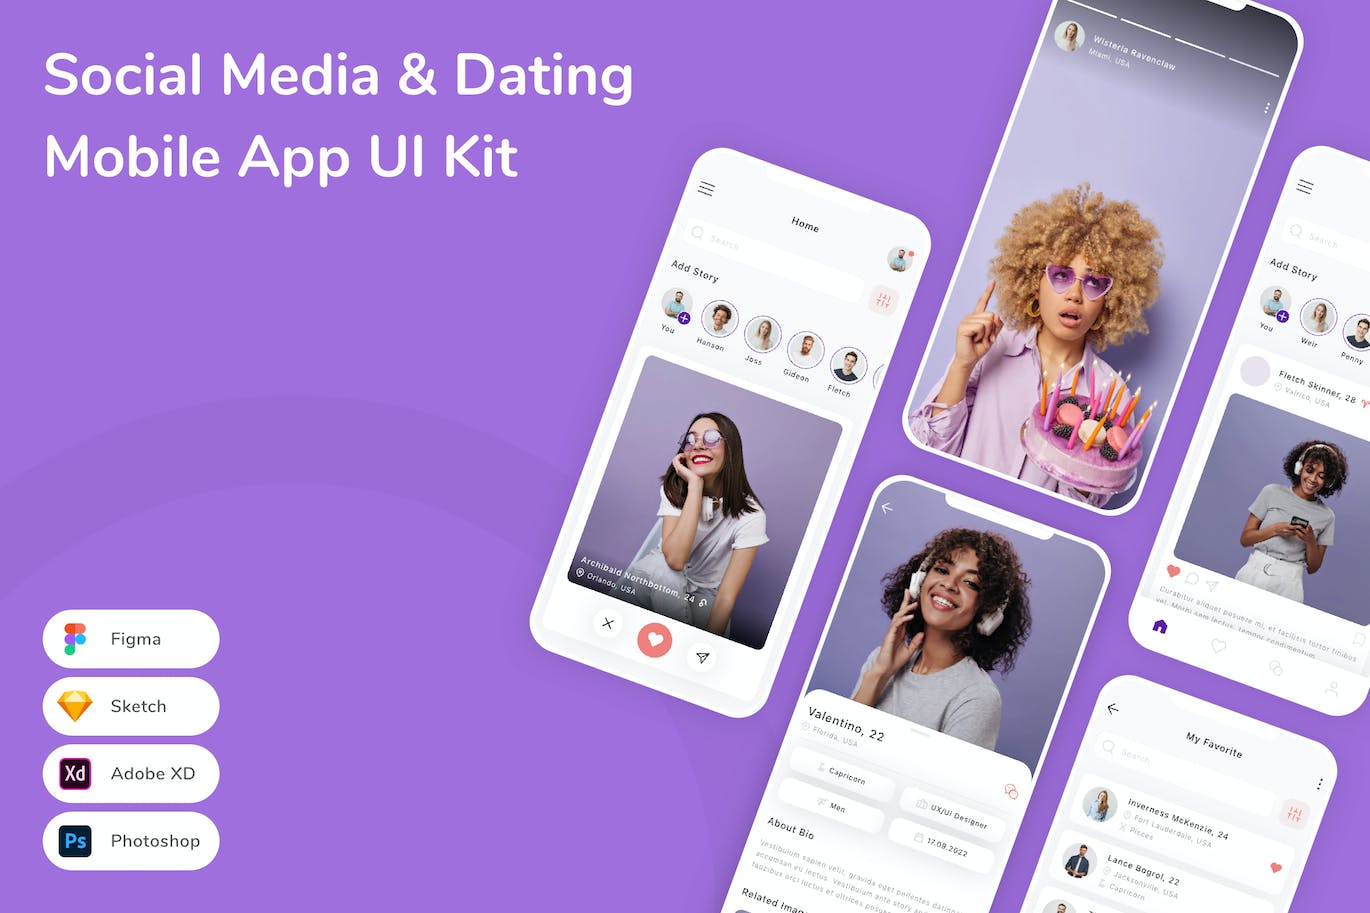 社交媒体&约会App手机应用程序UI设计素材 Social Media & Dating Mobile App UI Kit